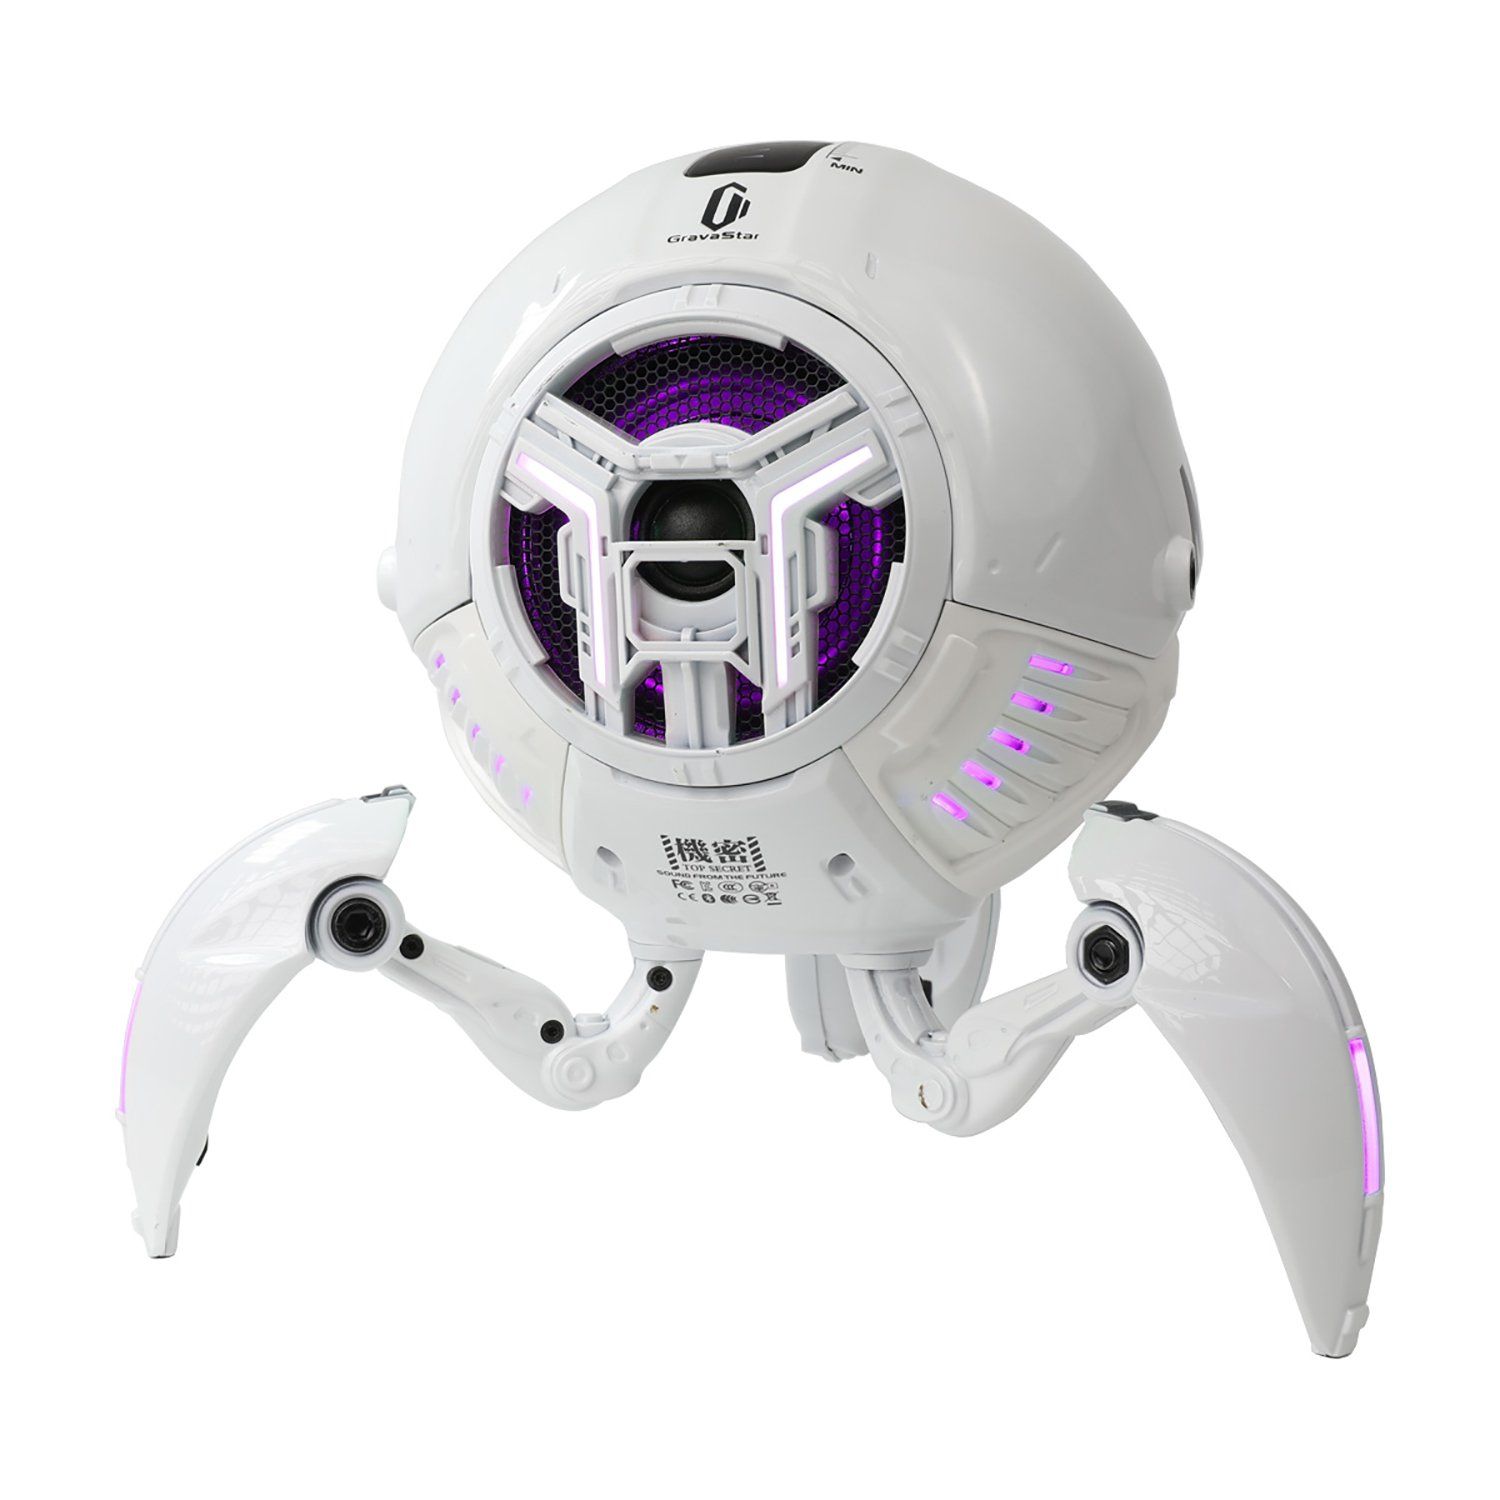 Gravastar Mars Pro Wireless Bluetooth 5.0 Dystopian Robotic Speaker Default Gravastar 